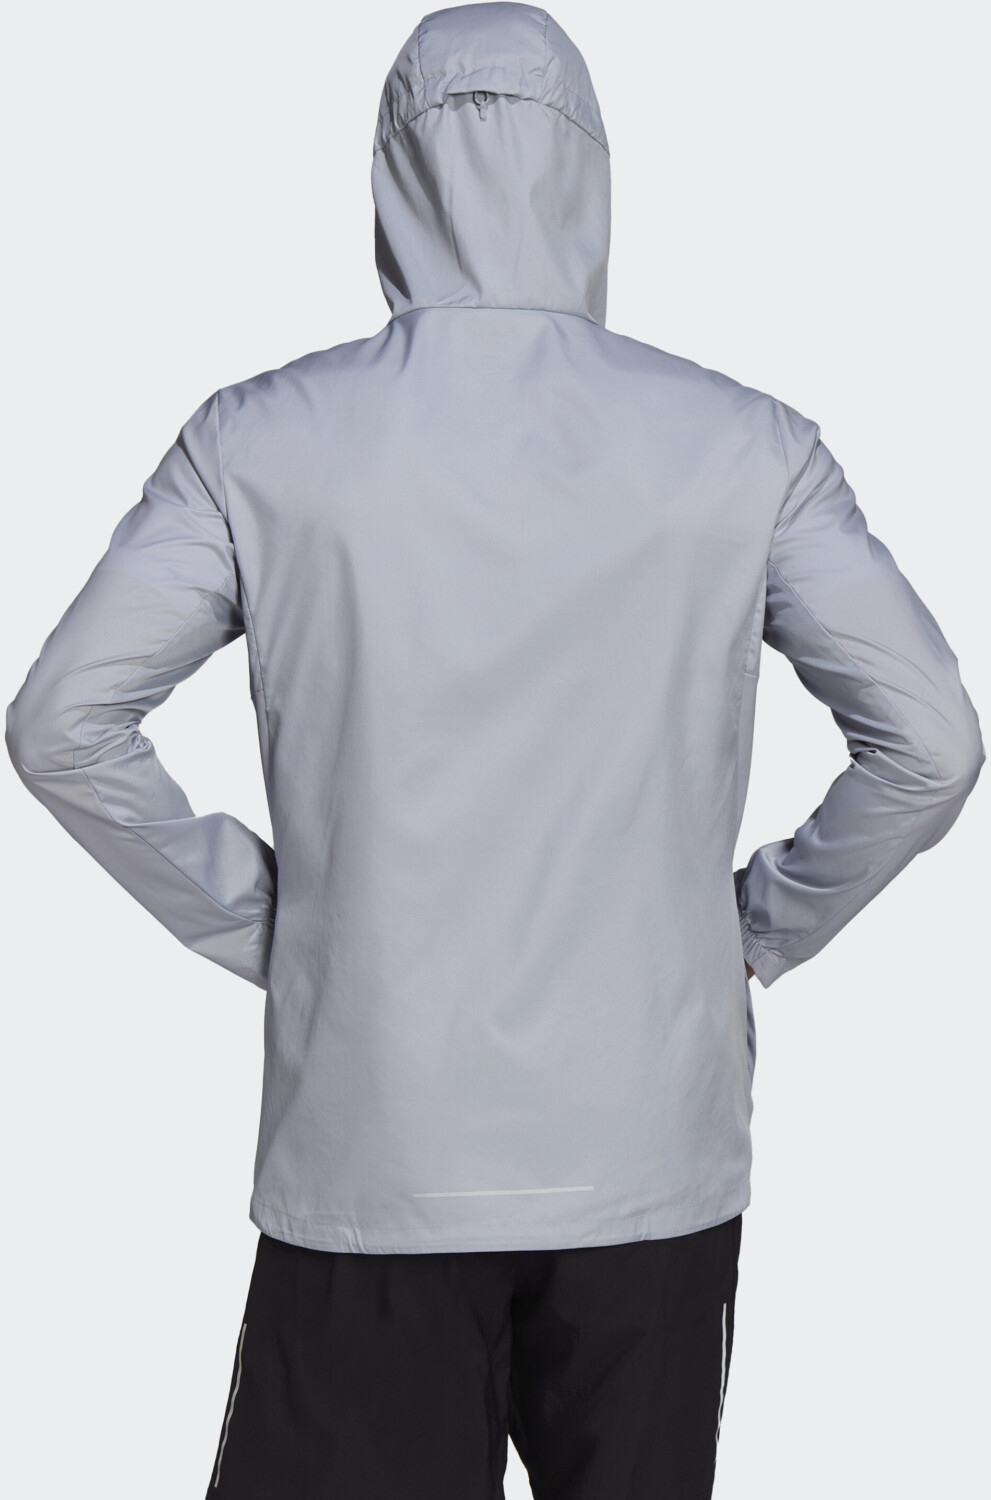 Adidas Own the Run Jacket halo silver/reflective silver ab 69,05 € |  Preisvergleich bei